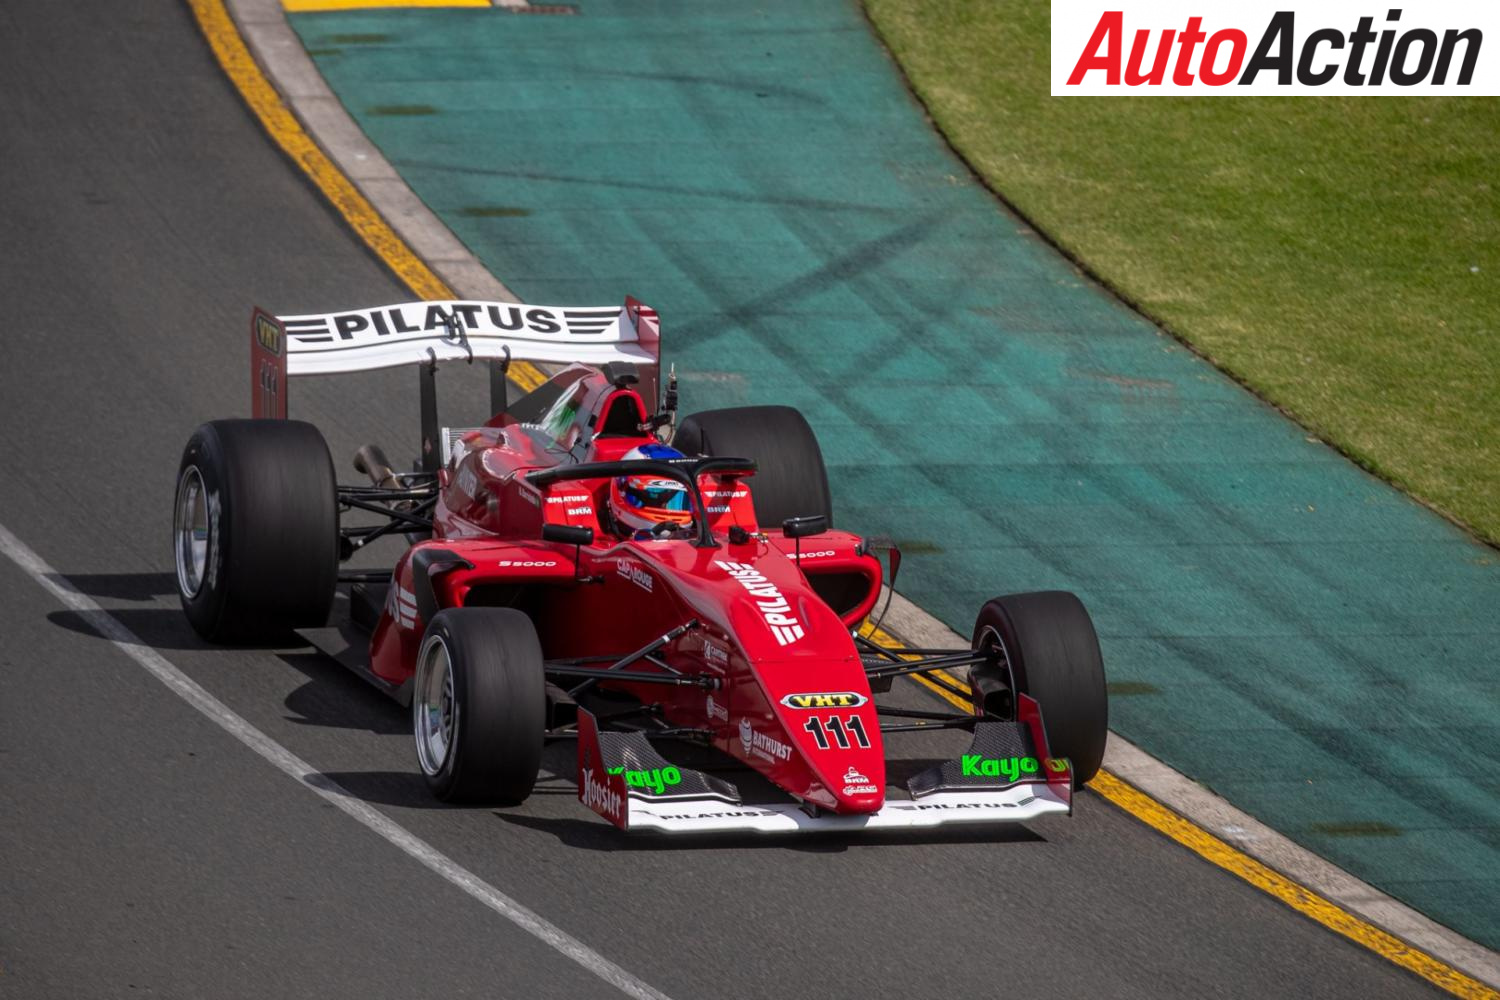 Rubens Barrichello hampered by braking issues - Photo: InSyde Media